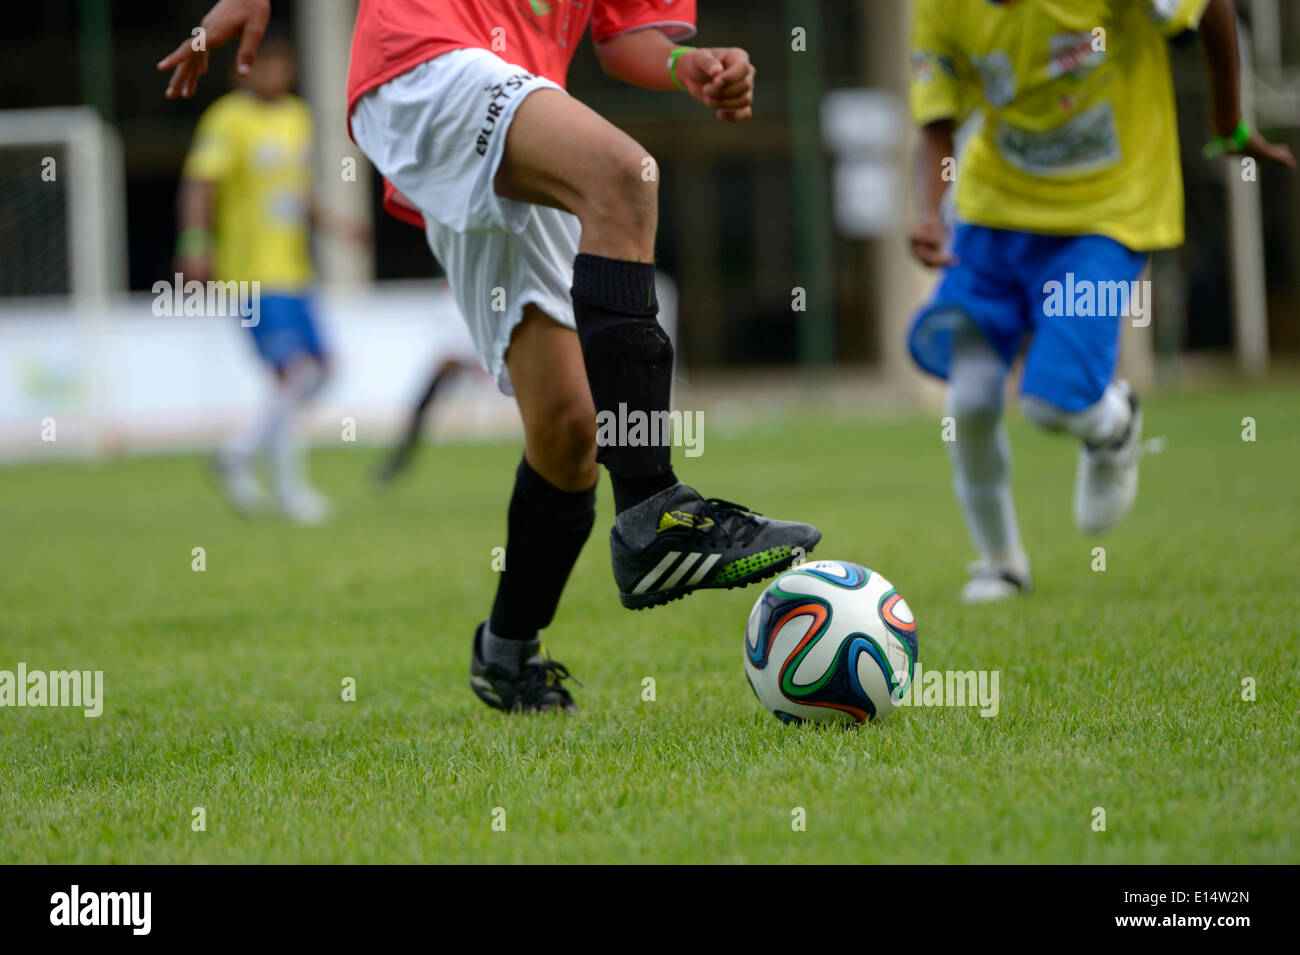 Soccer match, Brazil vs Egypt, Street Children World Cup 2014, Rio de Janeiro, Rio de Janeiro State, Brazil Stock Photo